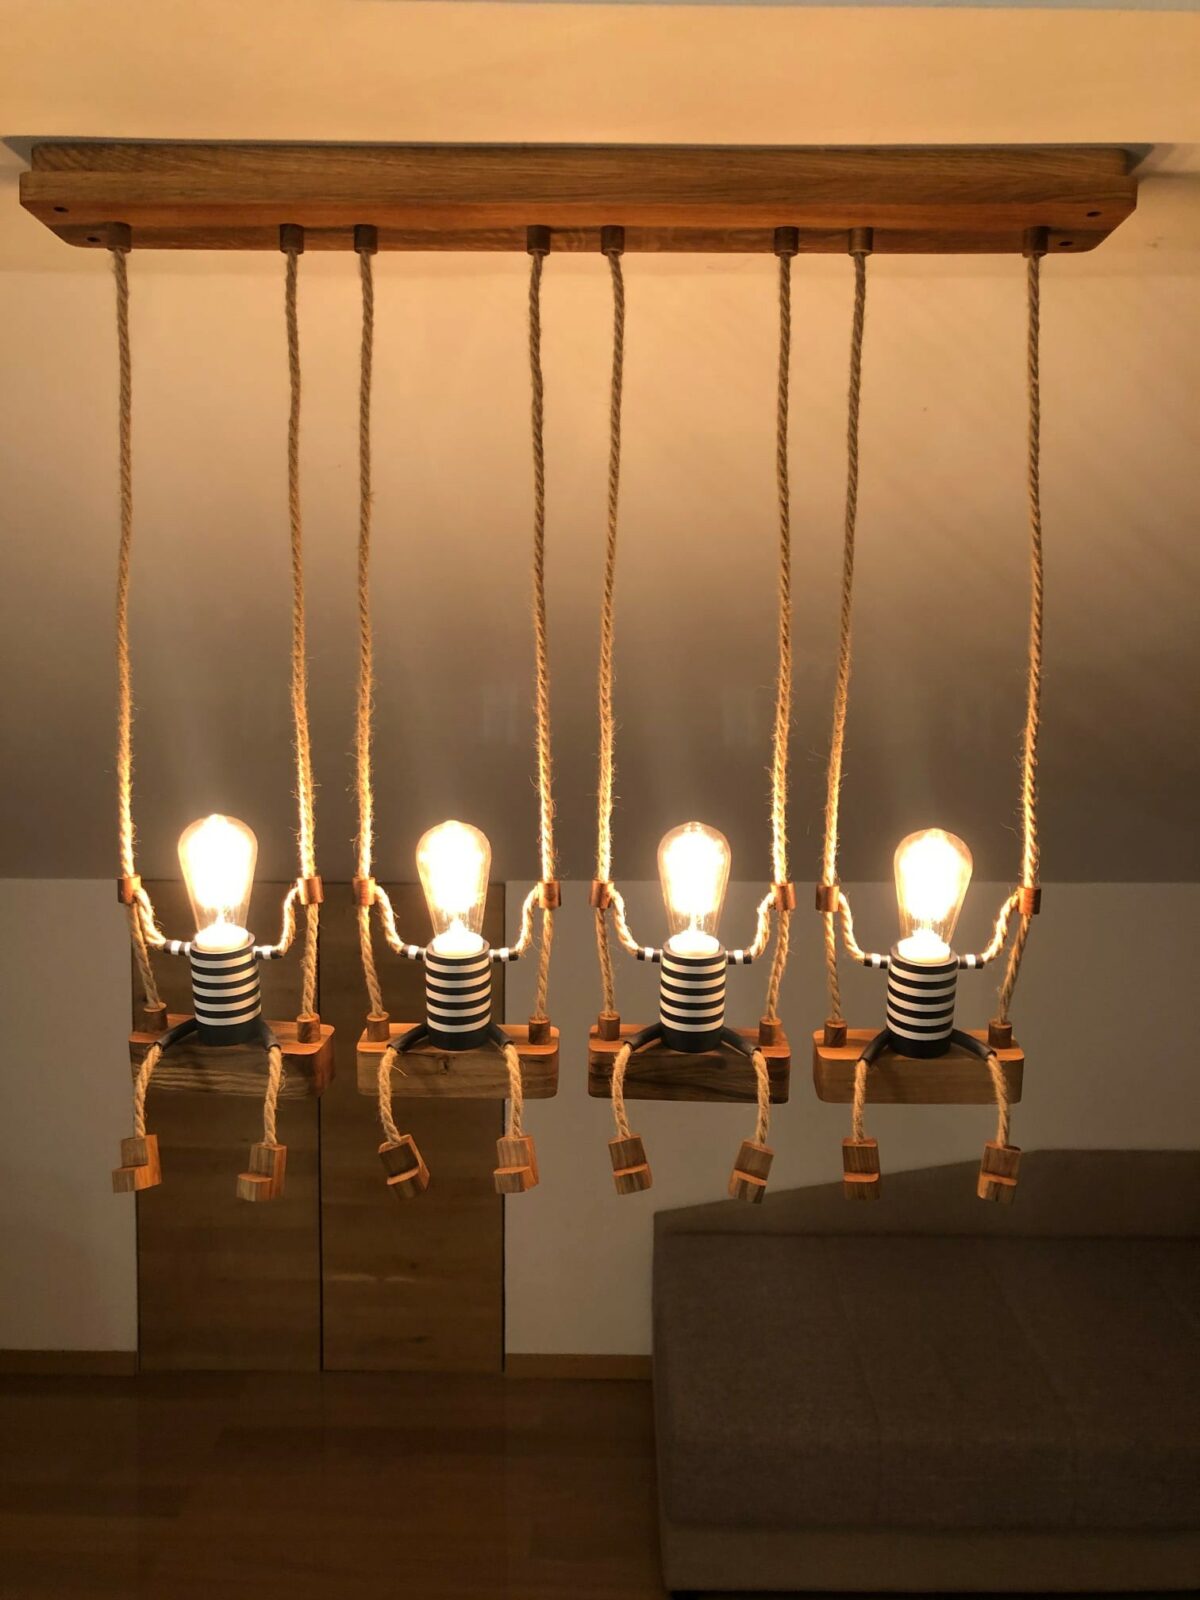 Creative Lamps Of Light Bulb Head Figures By Ivan Cvitkovic 2